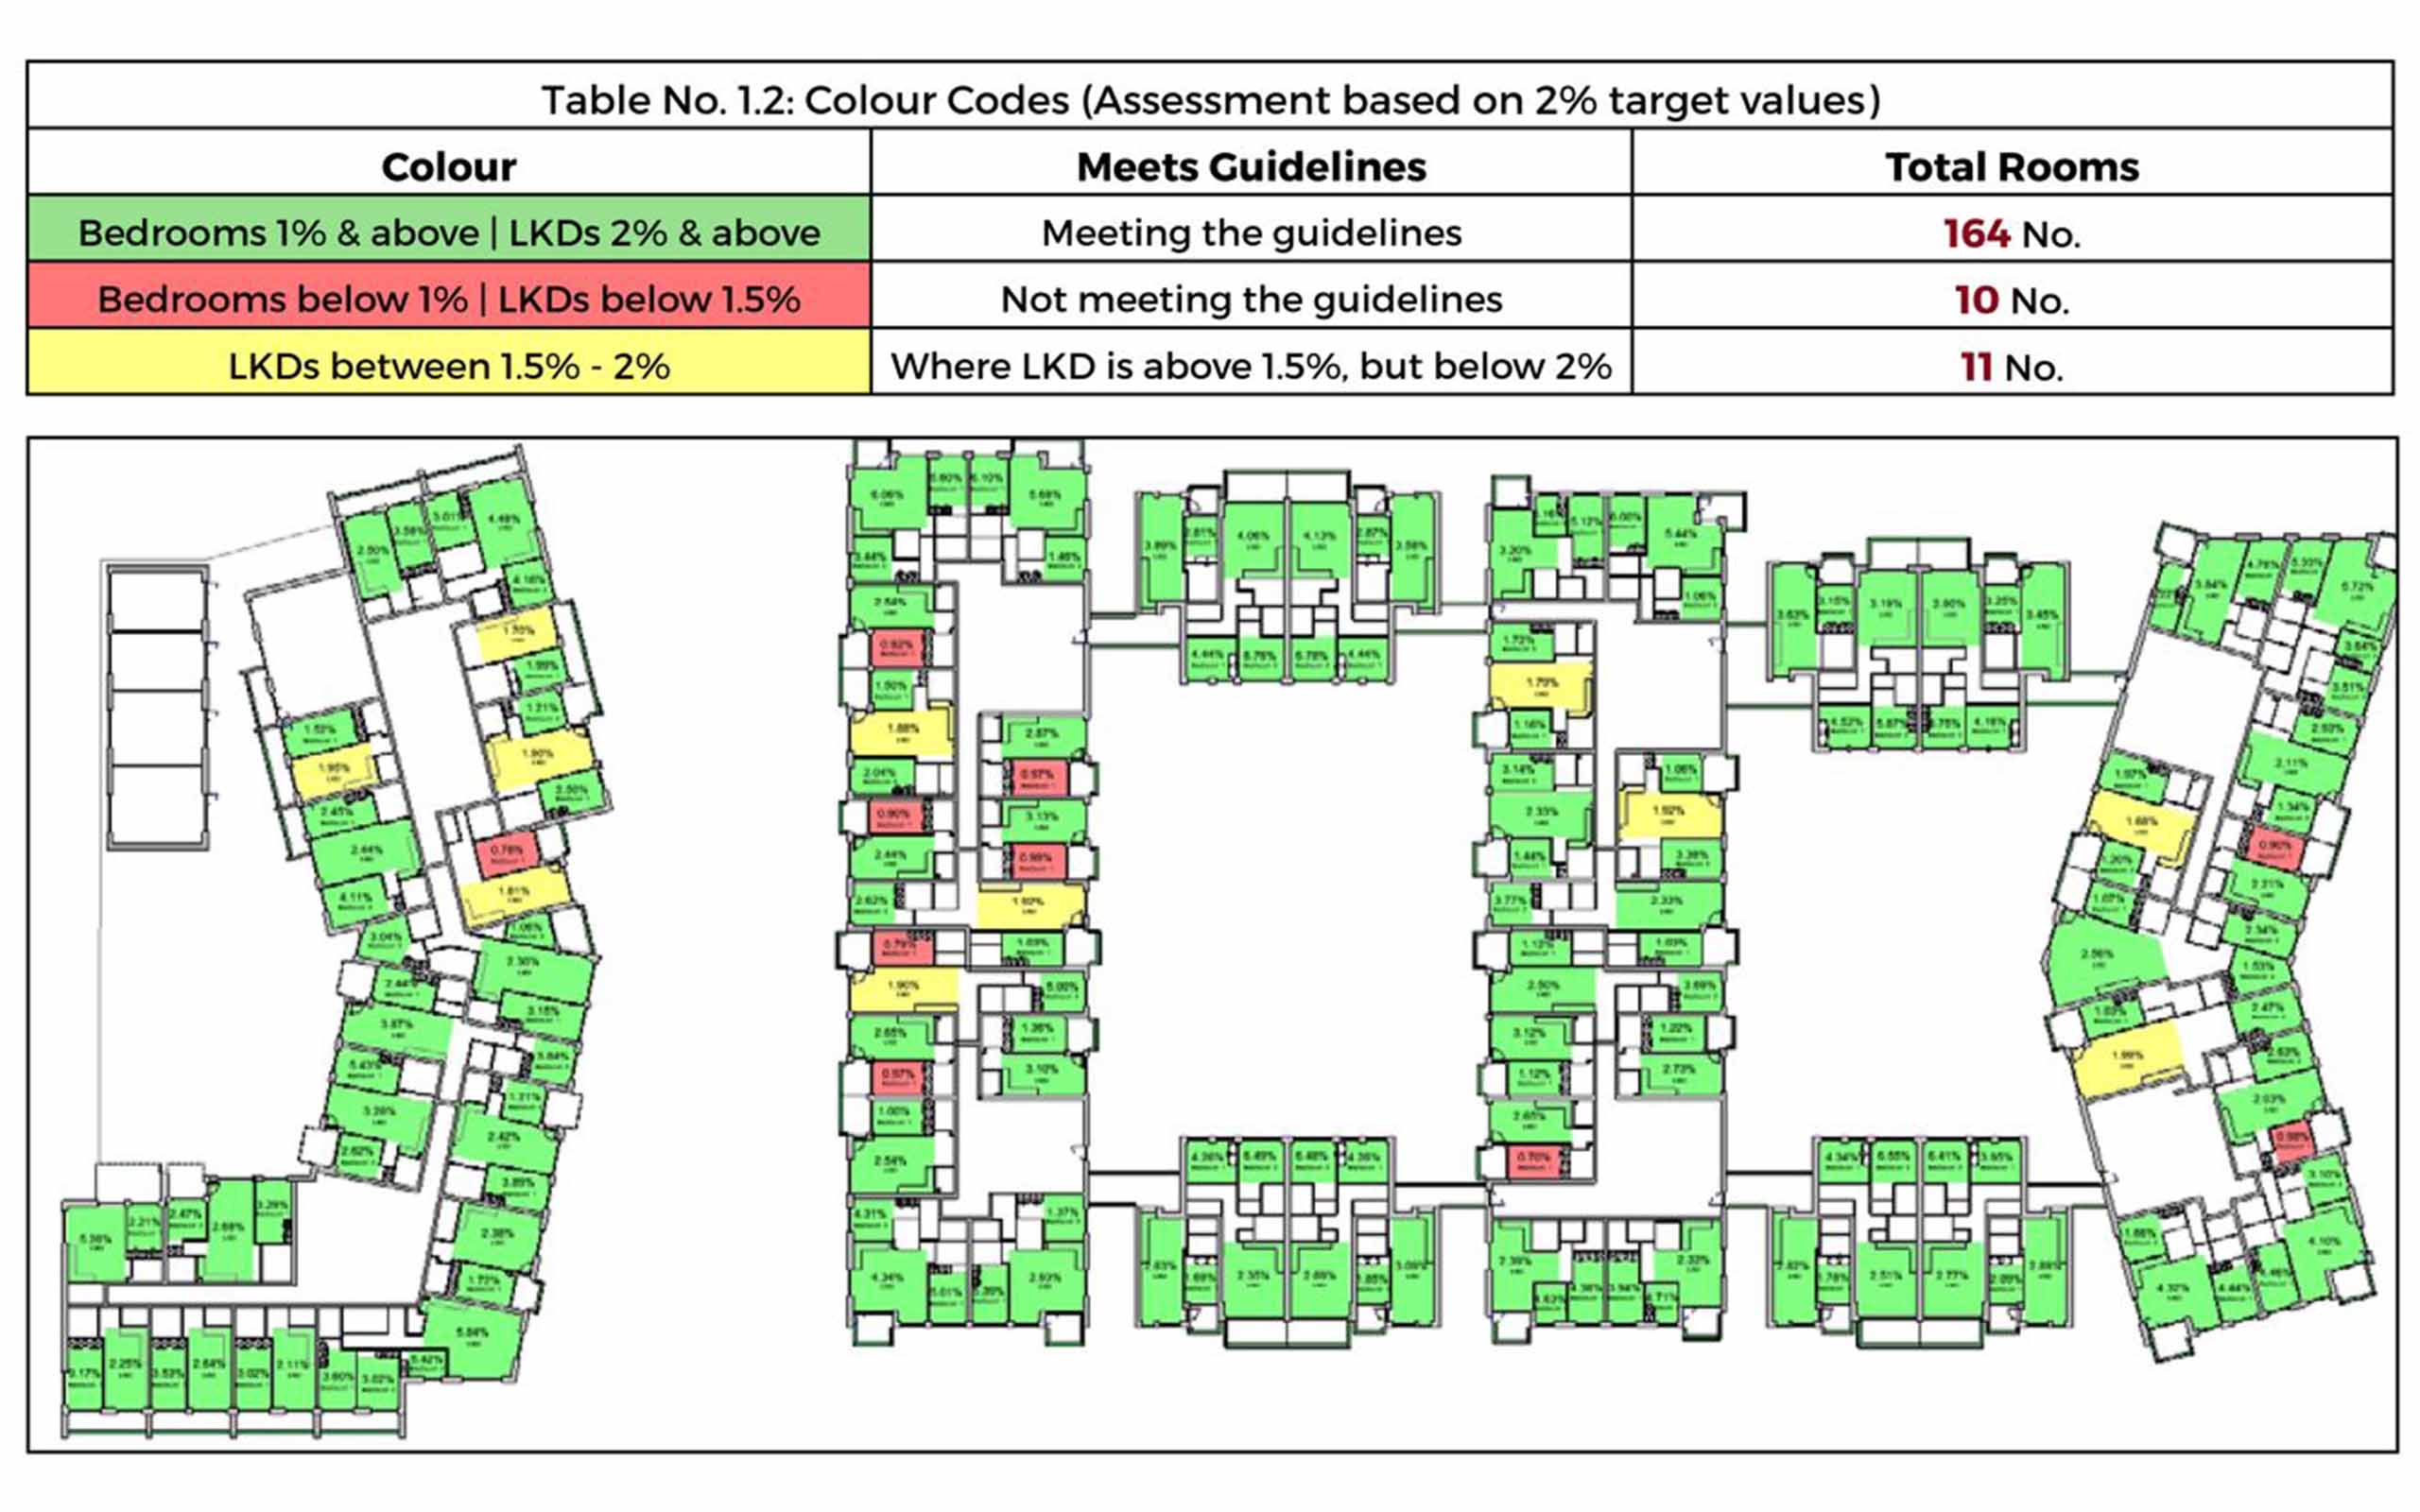 Floorplan of Assessed Building Showing Average Daylight Factor.